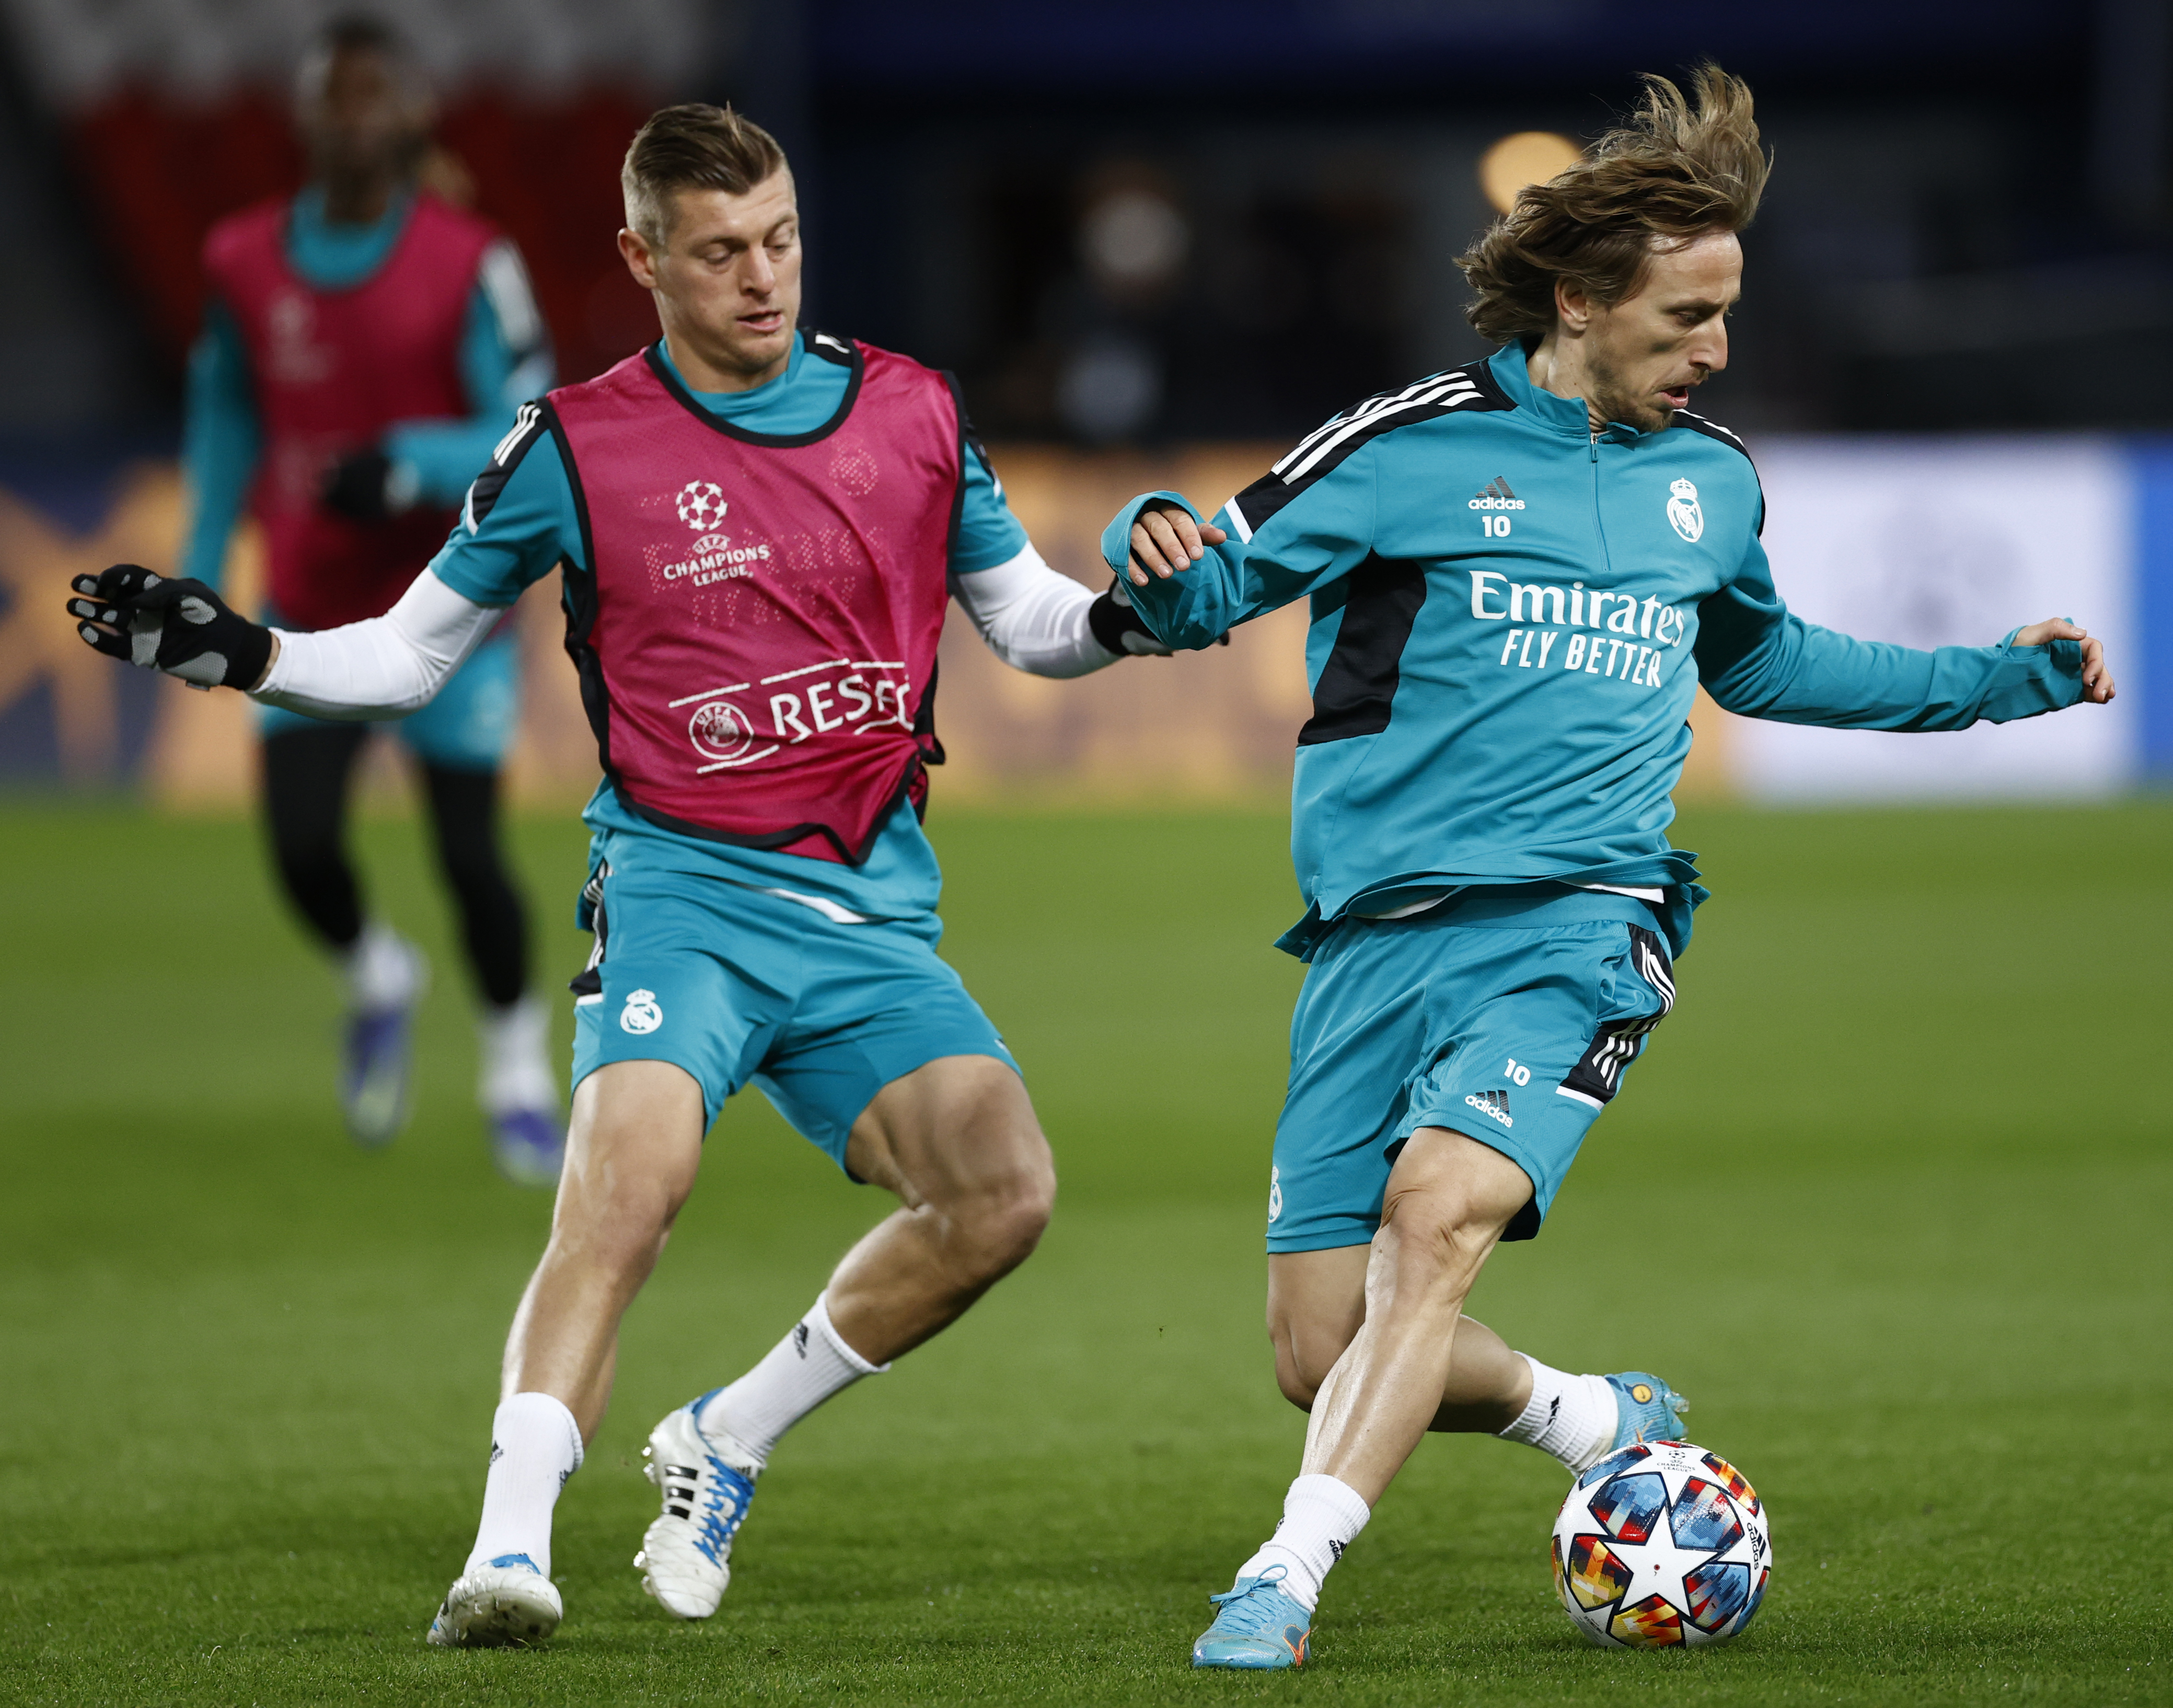 Real Madrid Training Session